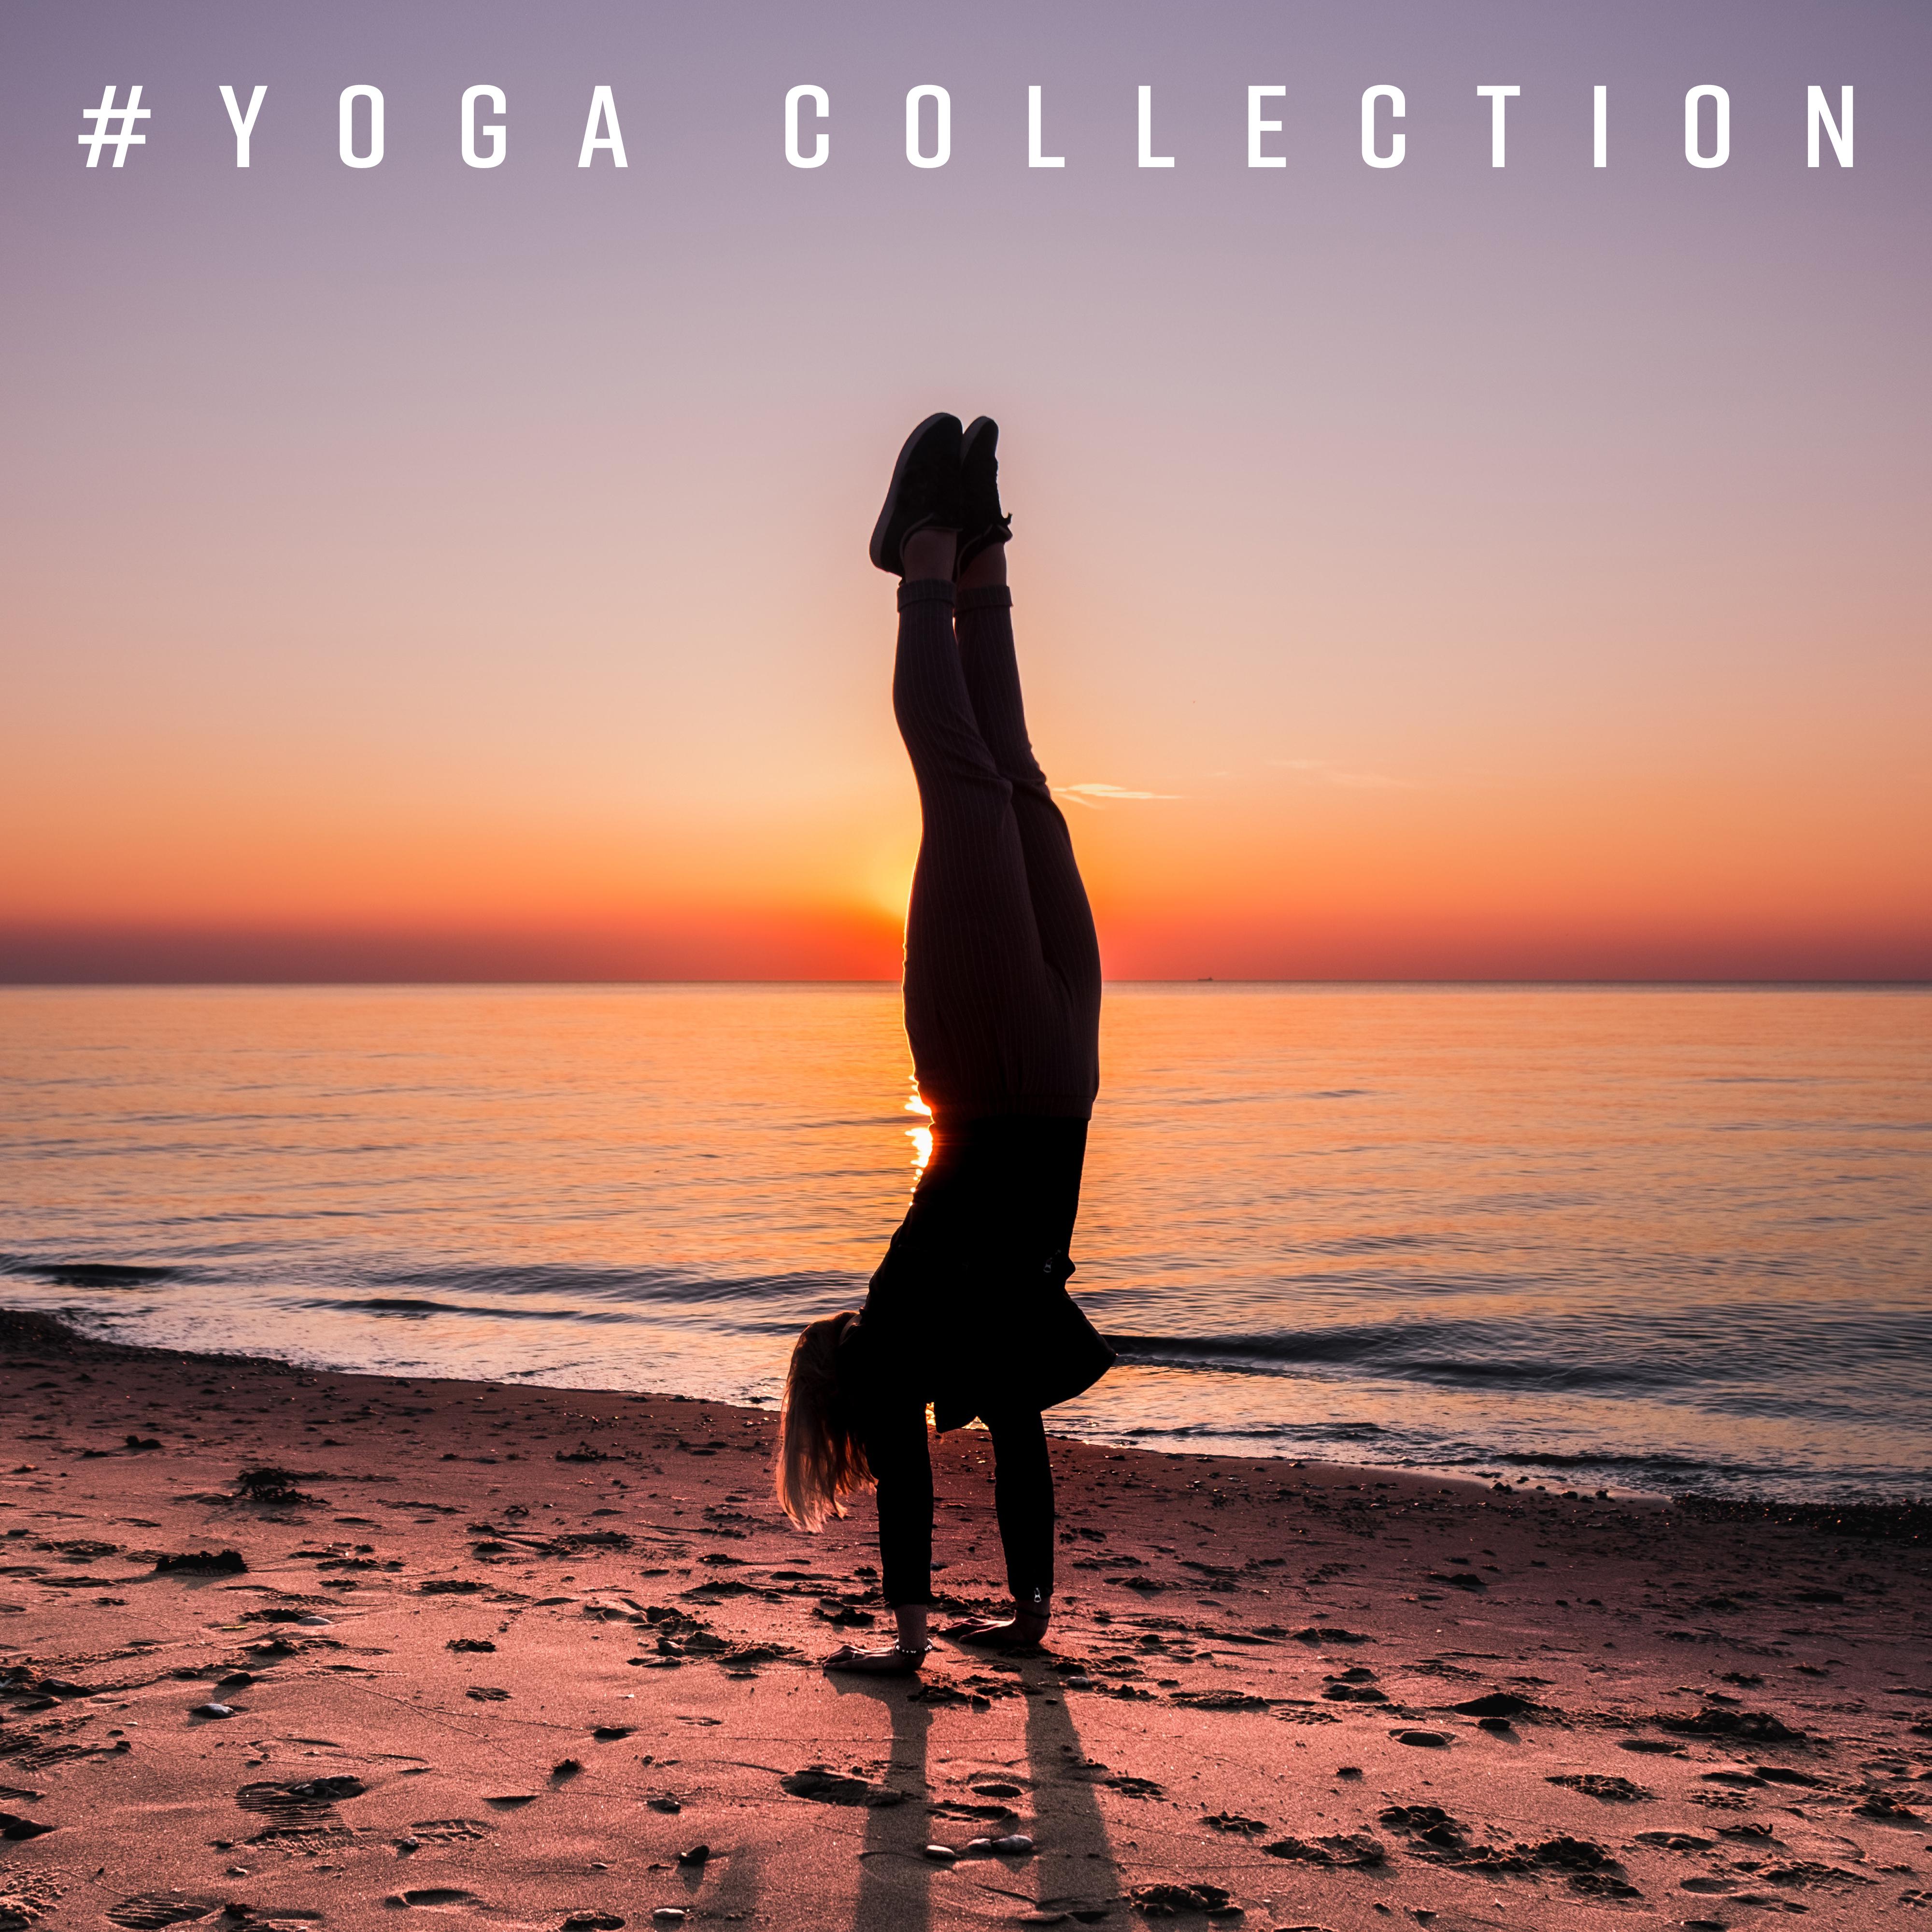 #Yoga Collection